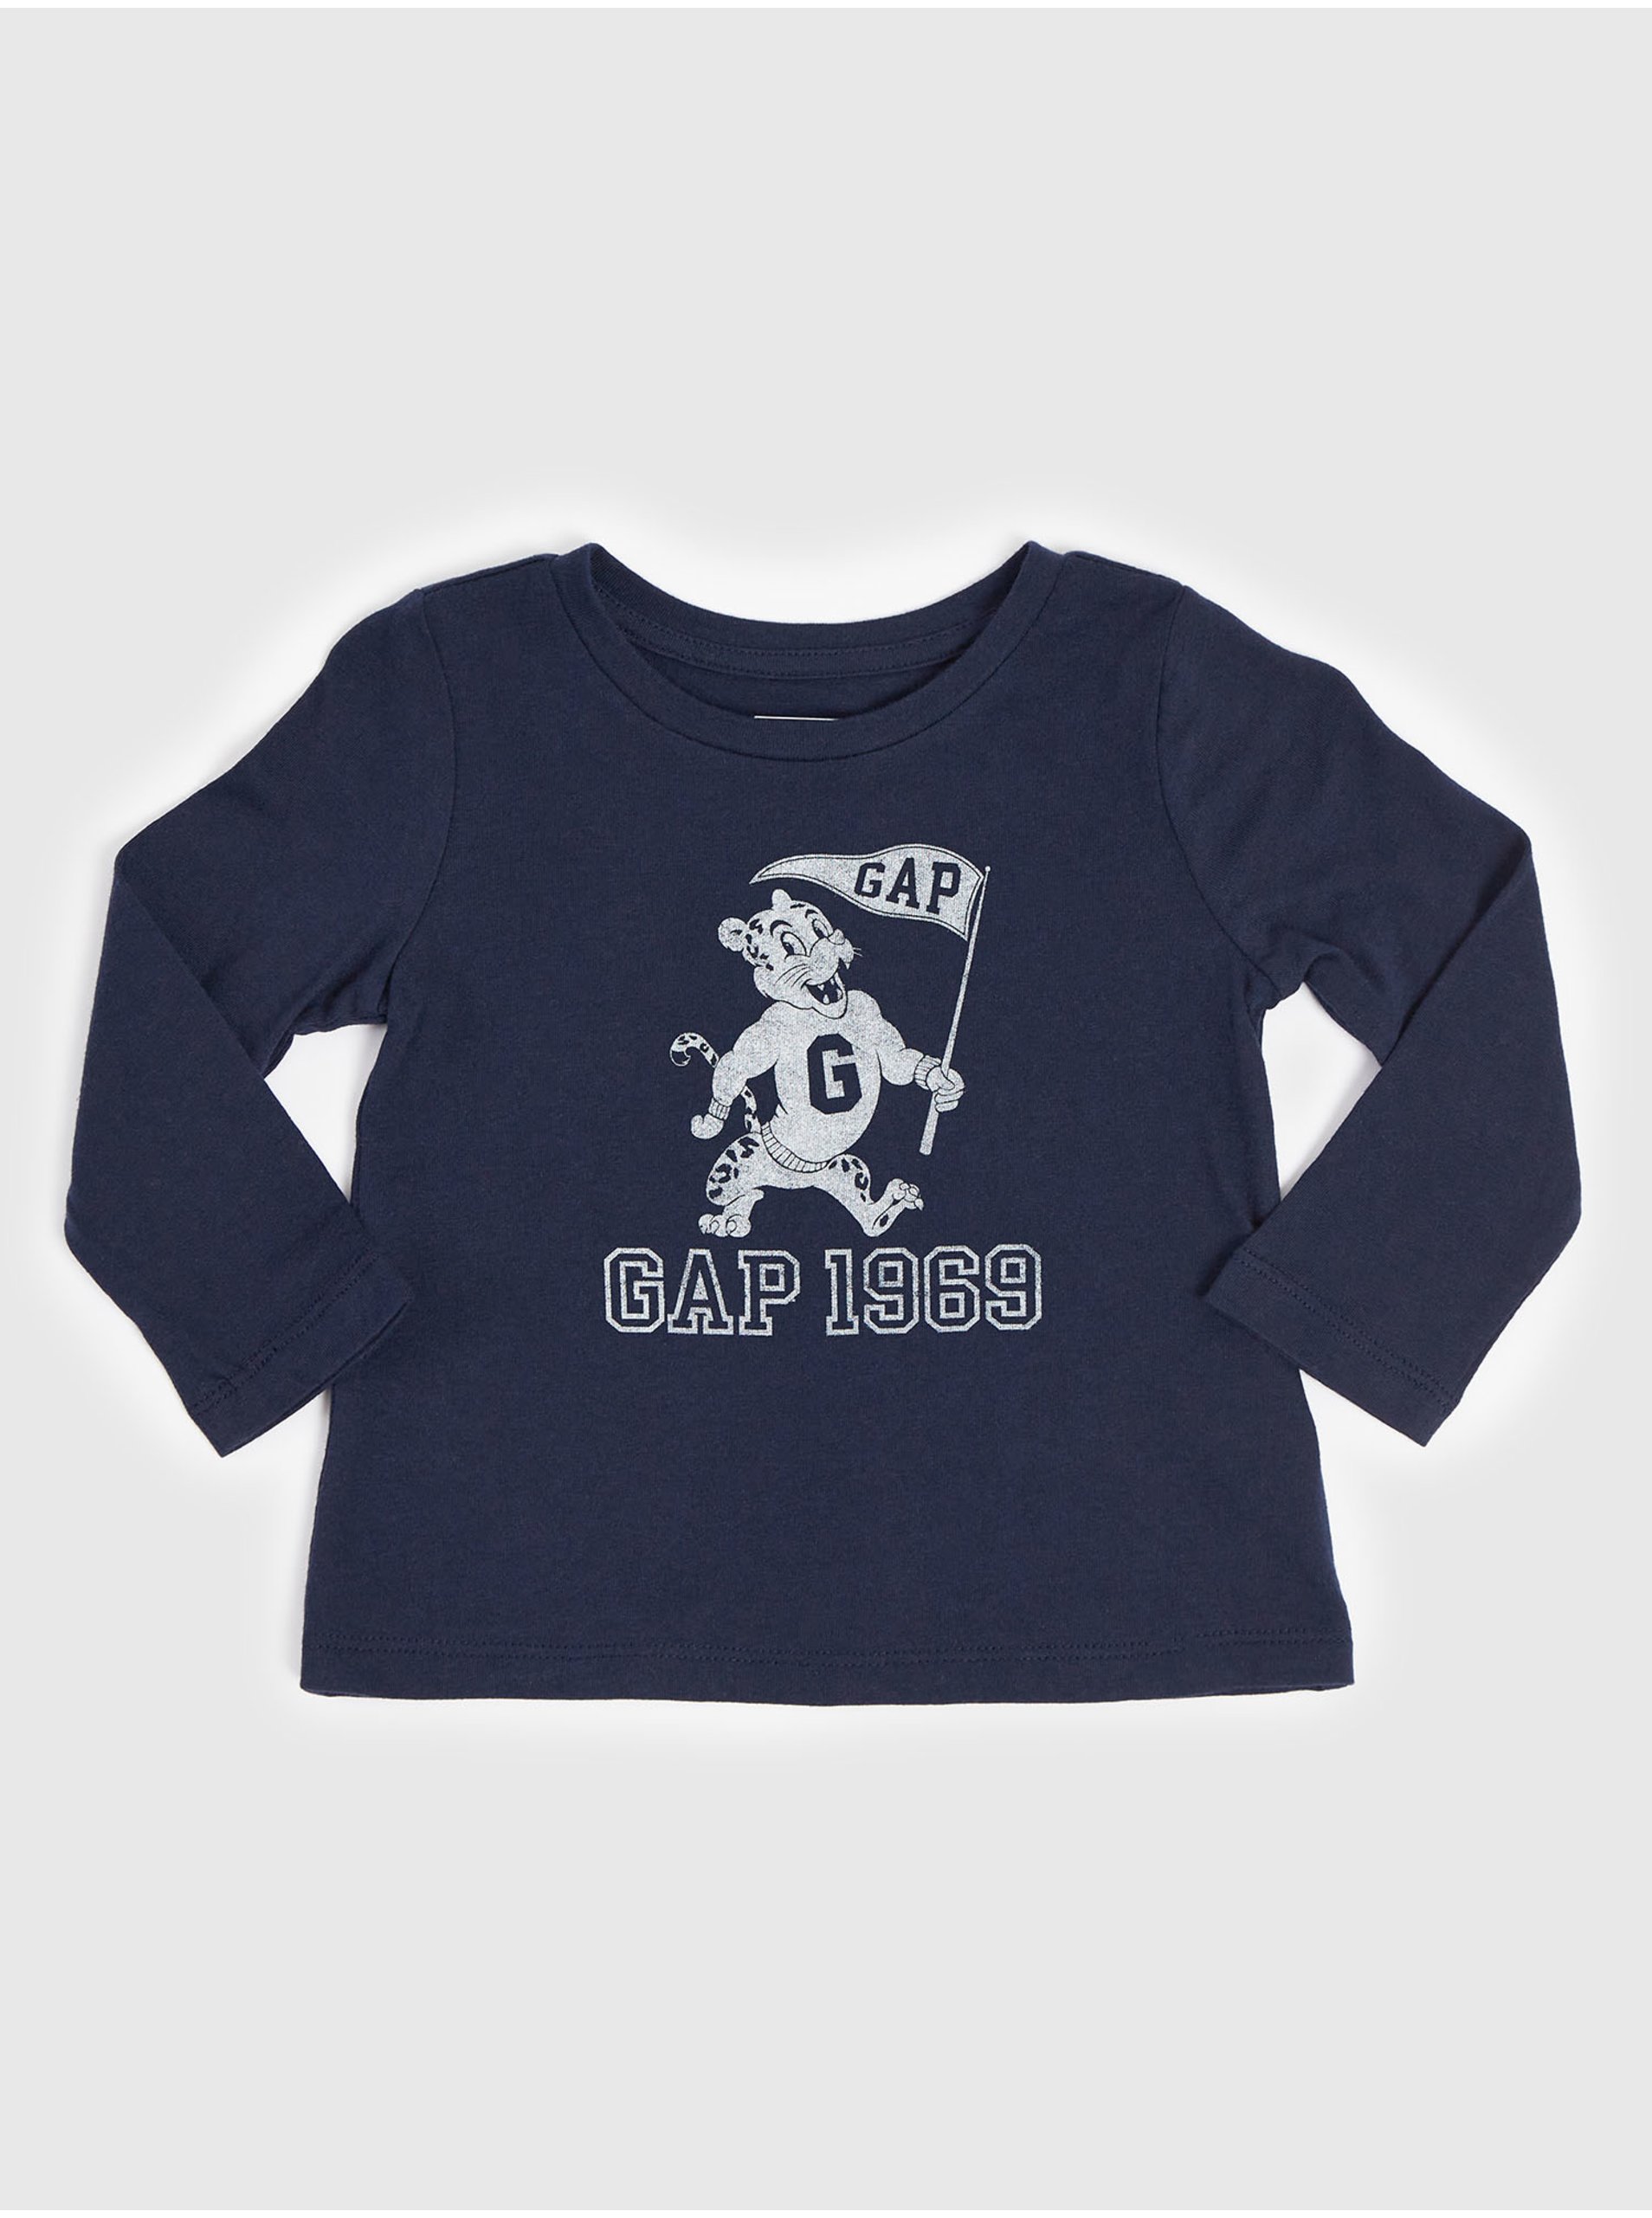 Lacno Tmavomodré detské tričko GAP organic 1969